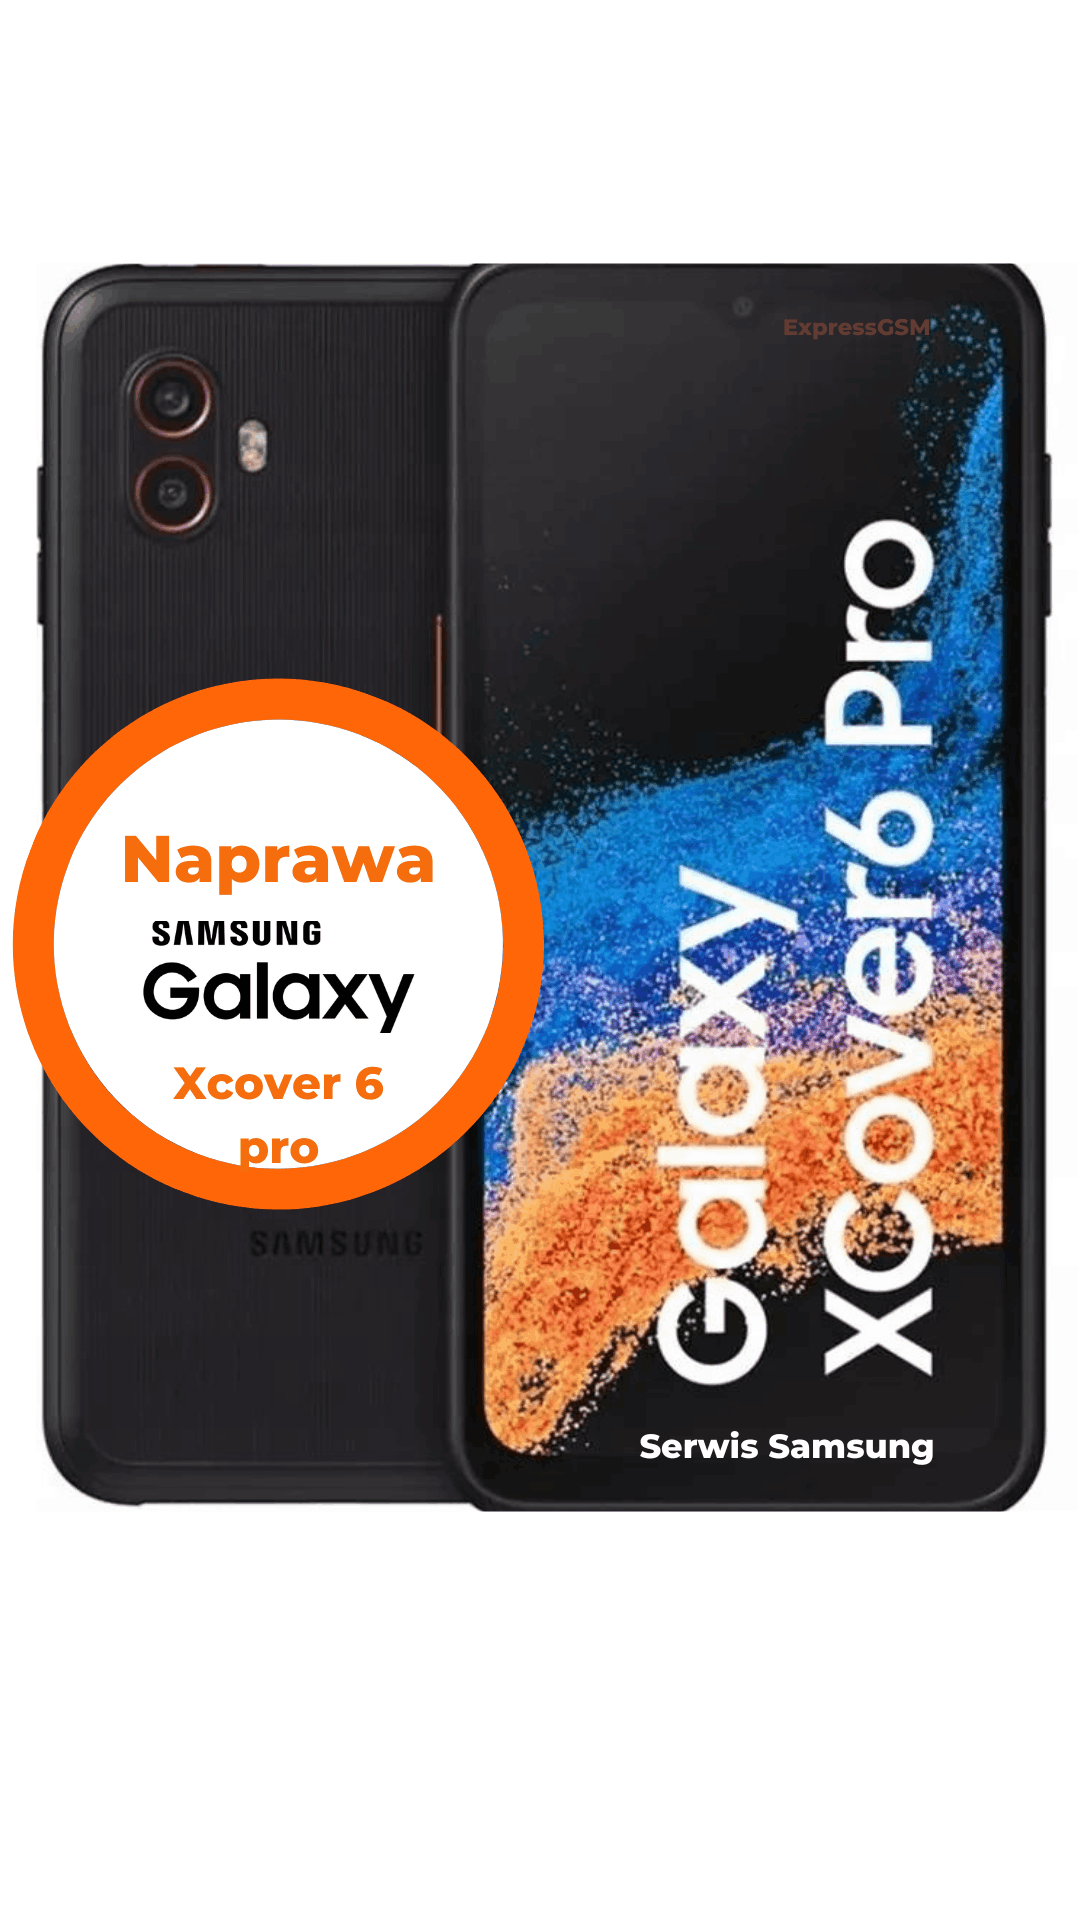 Naprawa Samsung Xcover 6 pro